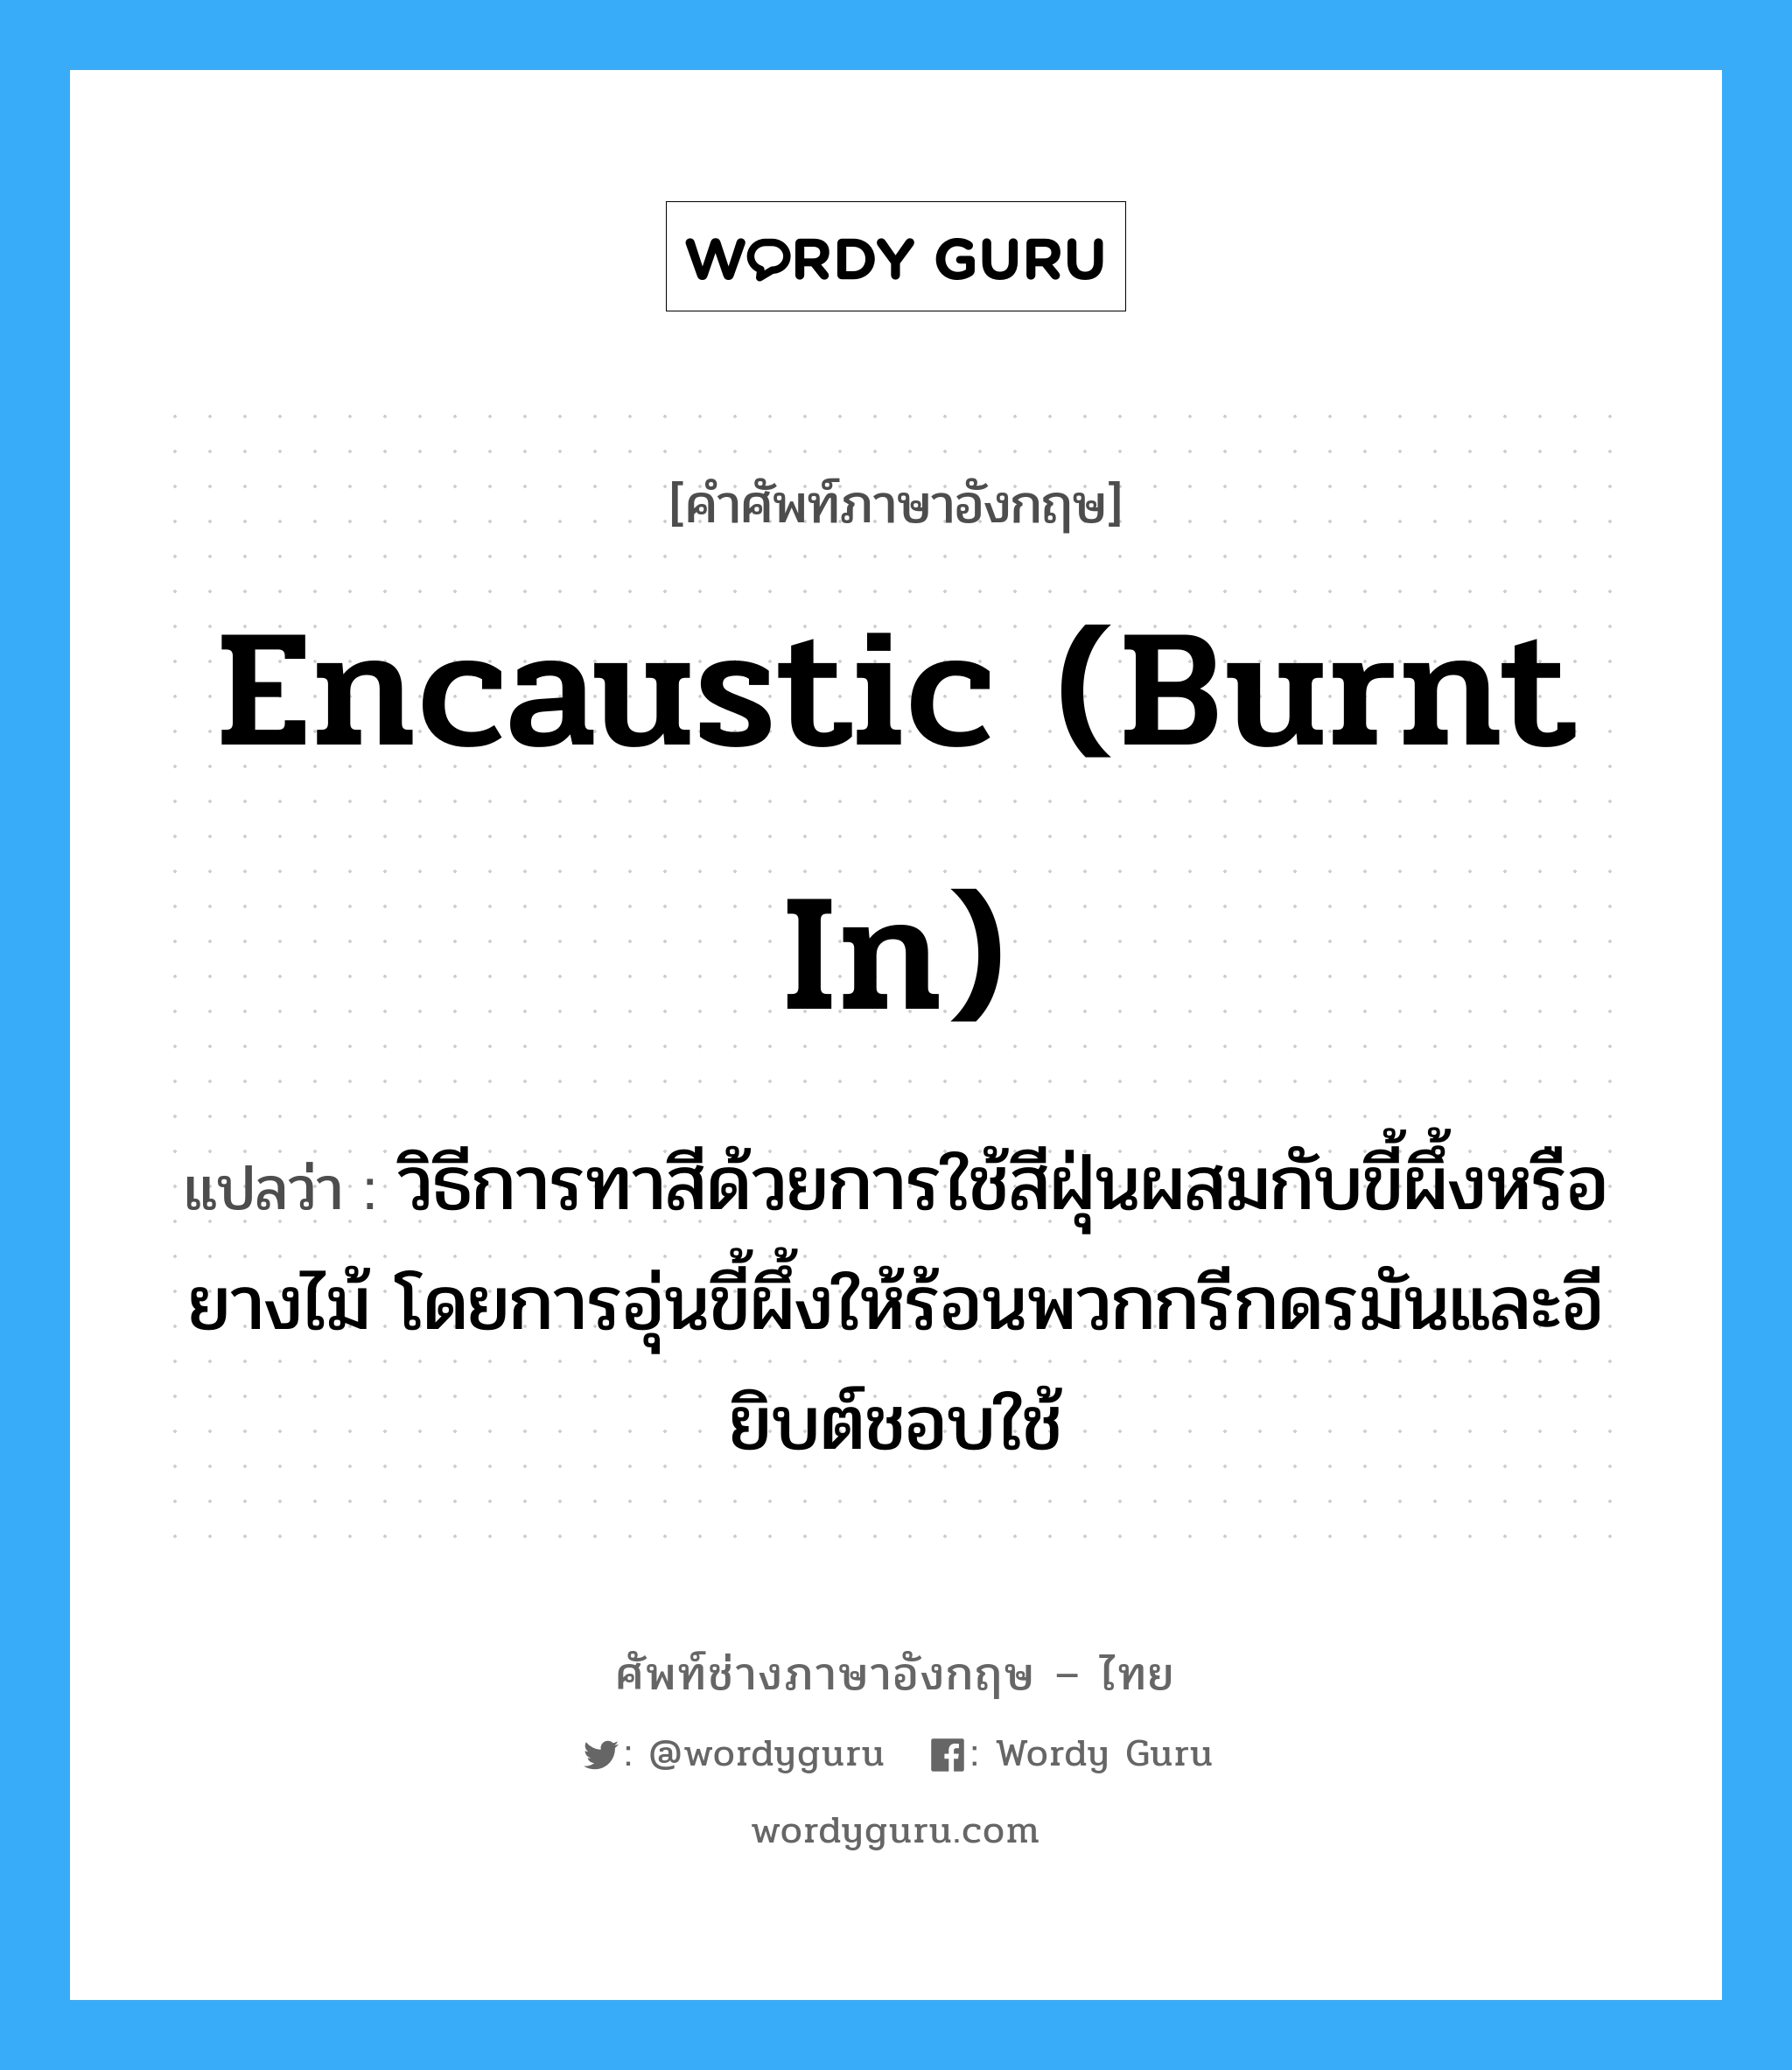 encaustic (burnt in) แปลว่า?, คำศัพท์ช่างภาษาอังกฤษ - ไทย encaustic (burnt in) คำศัพท์ภาษาอังกฤษ encaustic (burnt in) แปลว่า วิธีการทาสีด้วยการใช้สีฝุ่นผสมกับขี้ผึ้งหรือยางไม้ โดยการอุ่นขี้ผึ้งให้ร้อนพวกกรีกดรมันและอียิบต์ชอบใช้